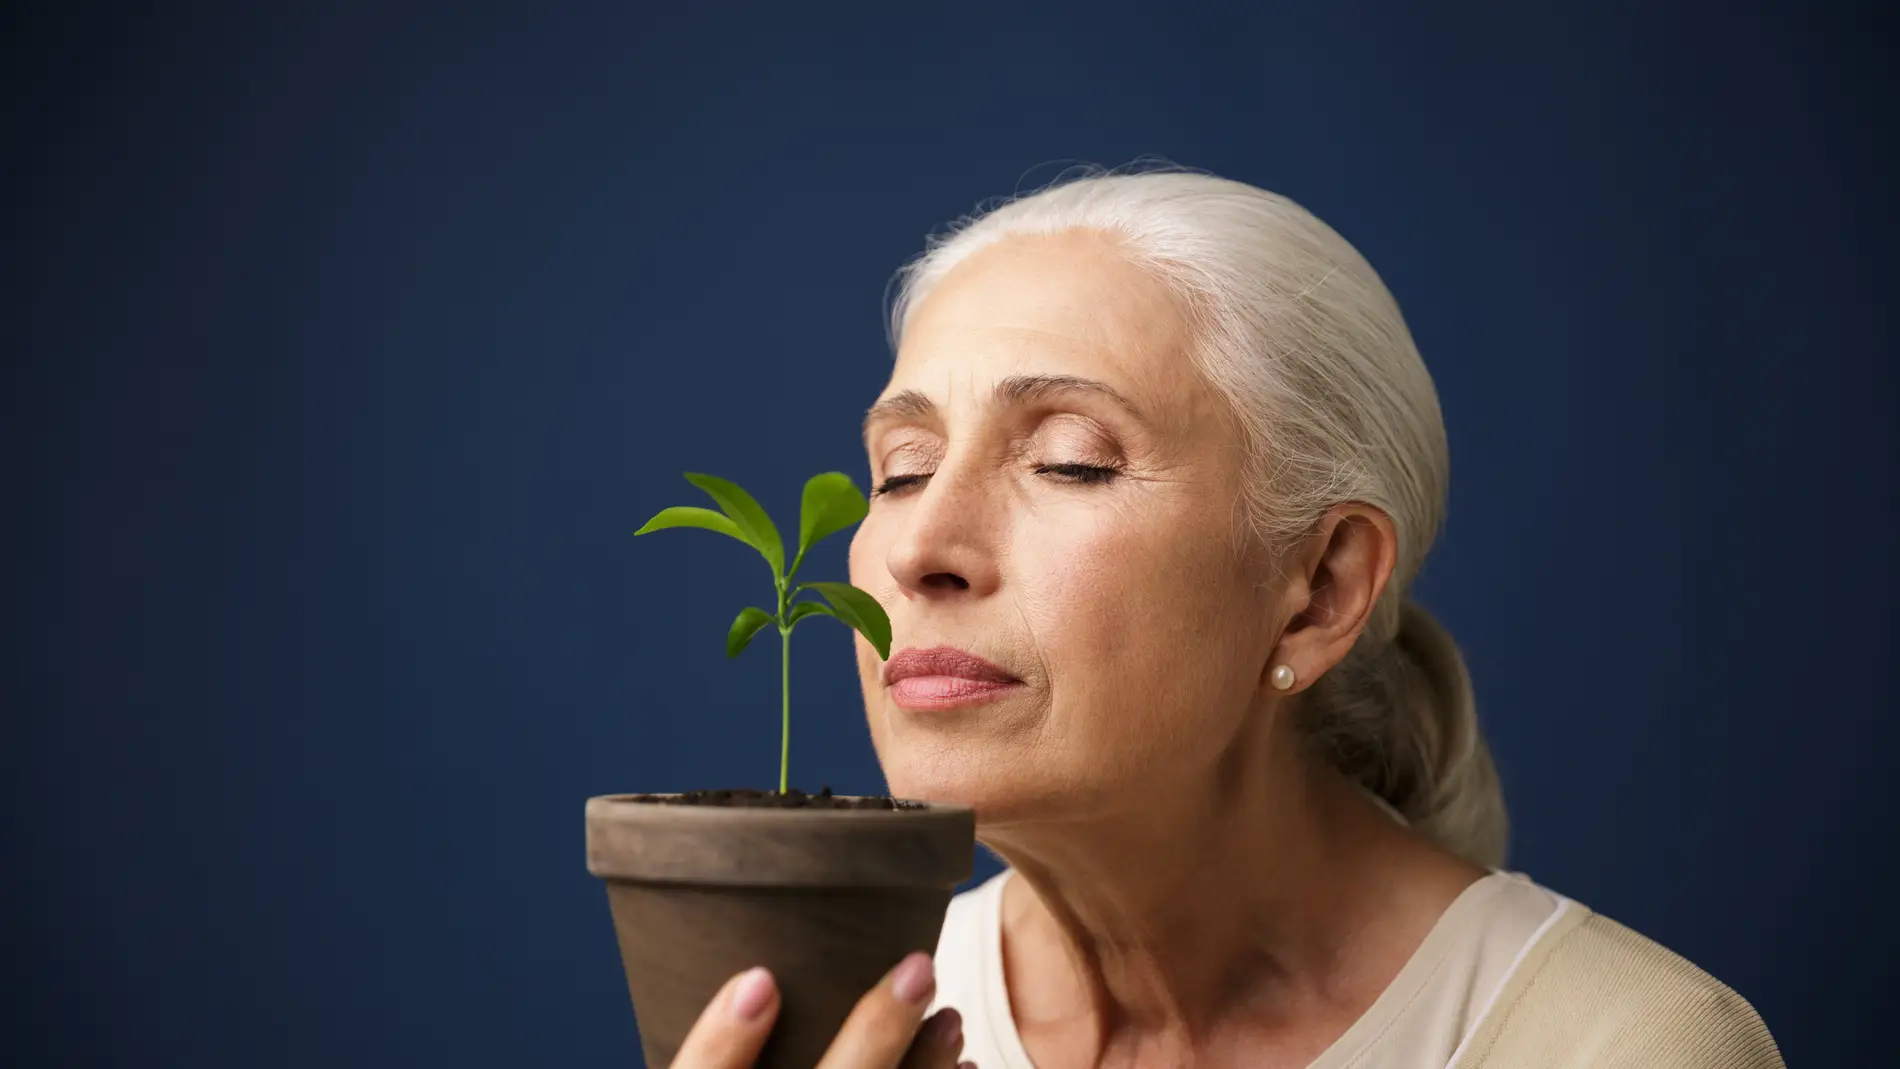 Mujer huele una planta